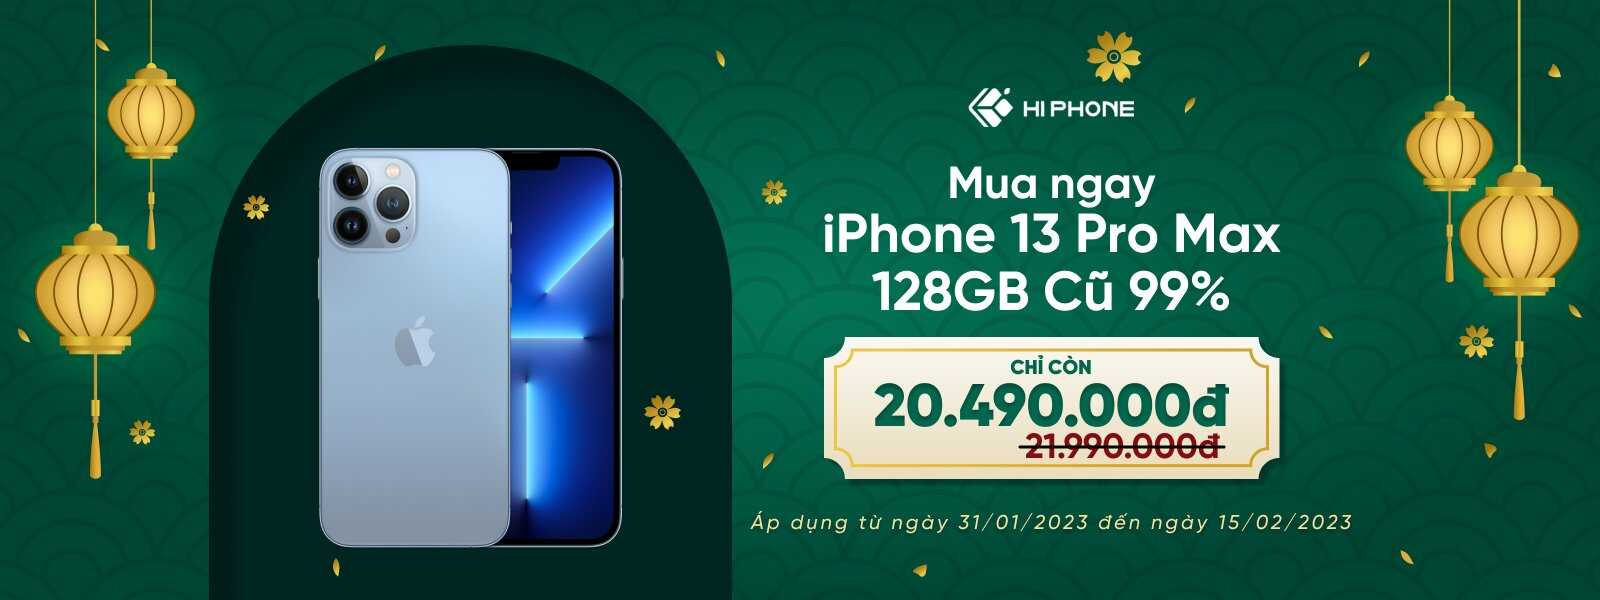 iphone 13 pro max cũ